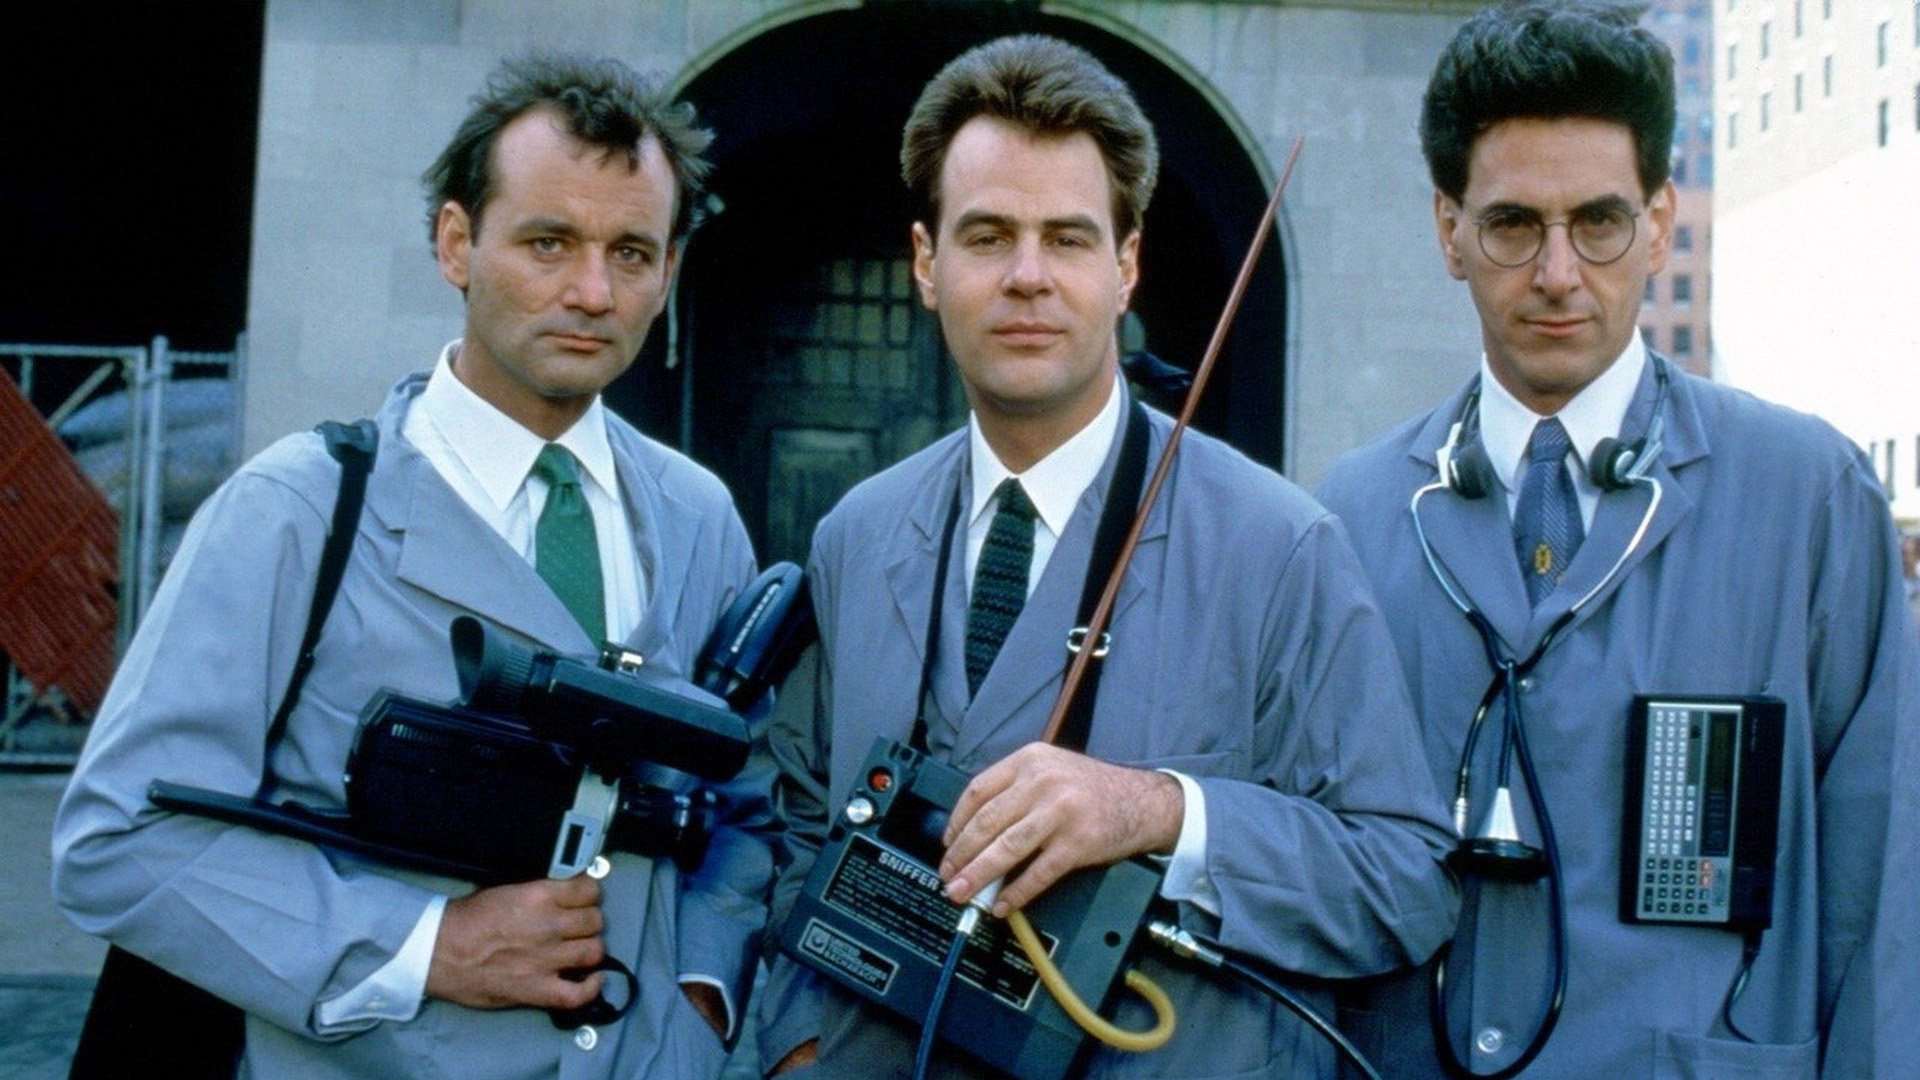 Venkman, Stantz and Spengler in their Ghostbusters uniforms